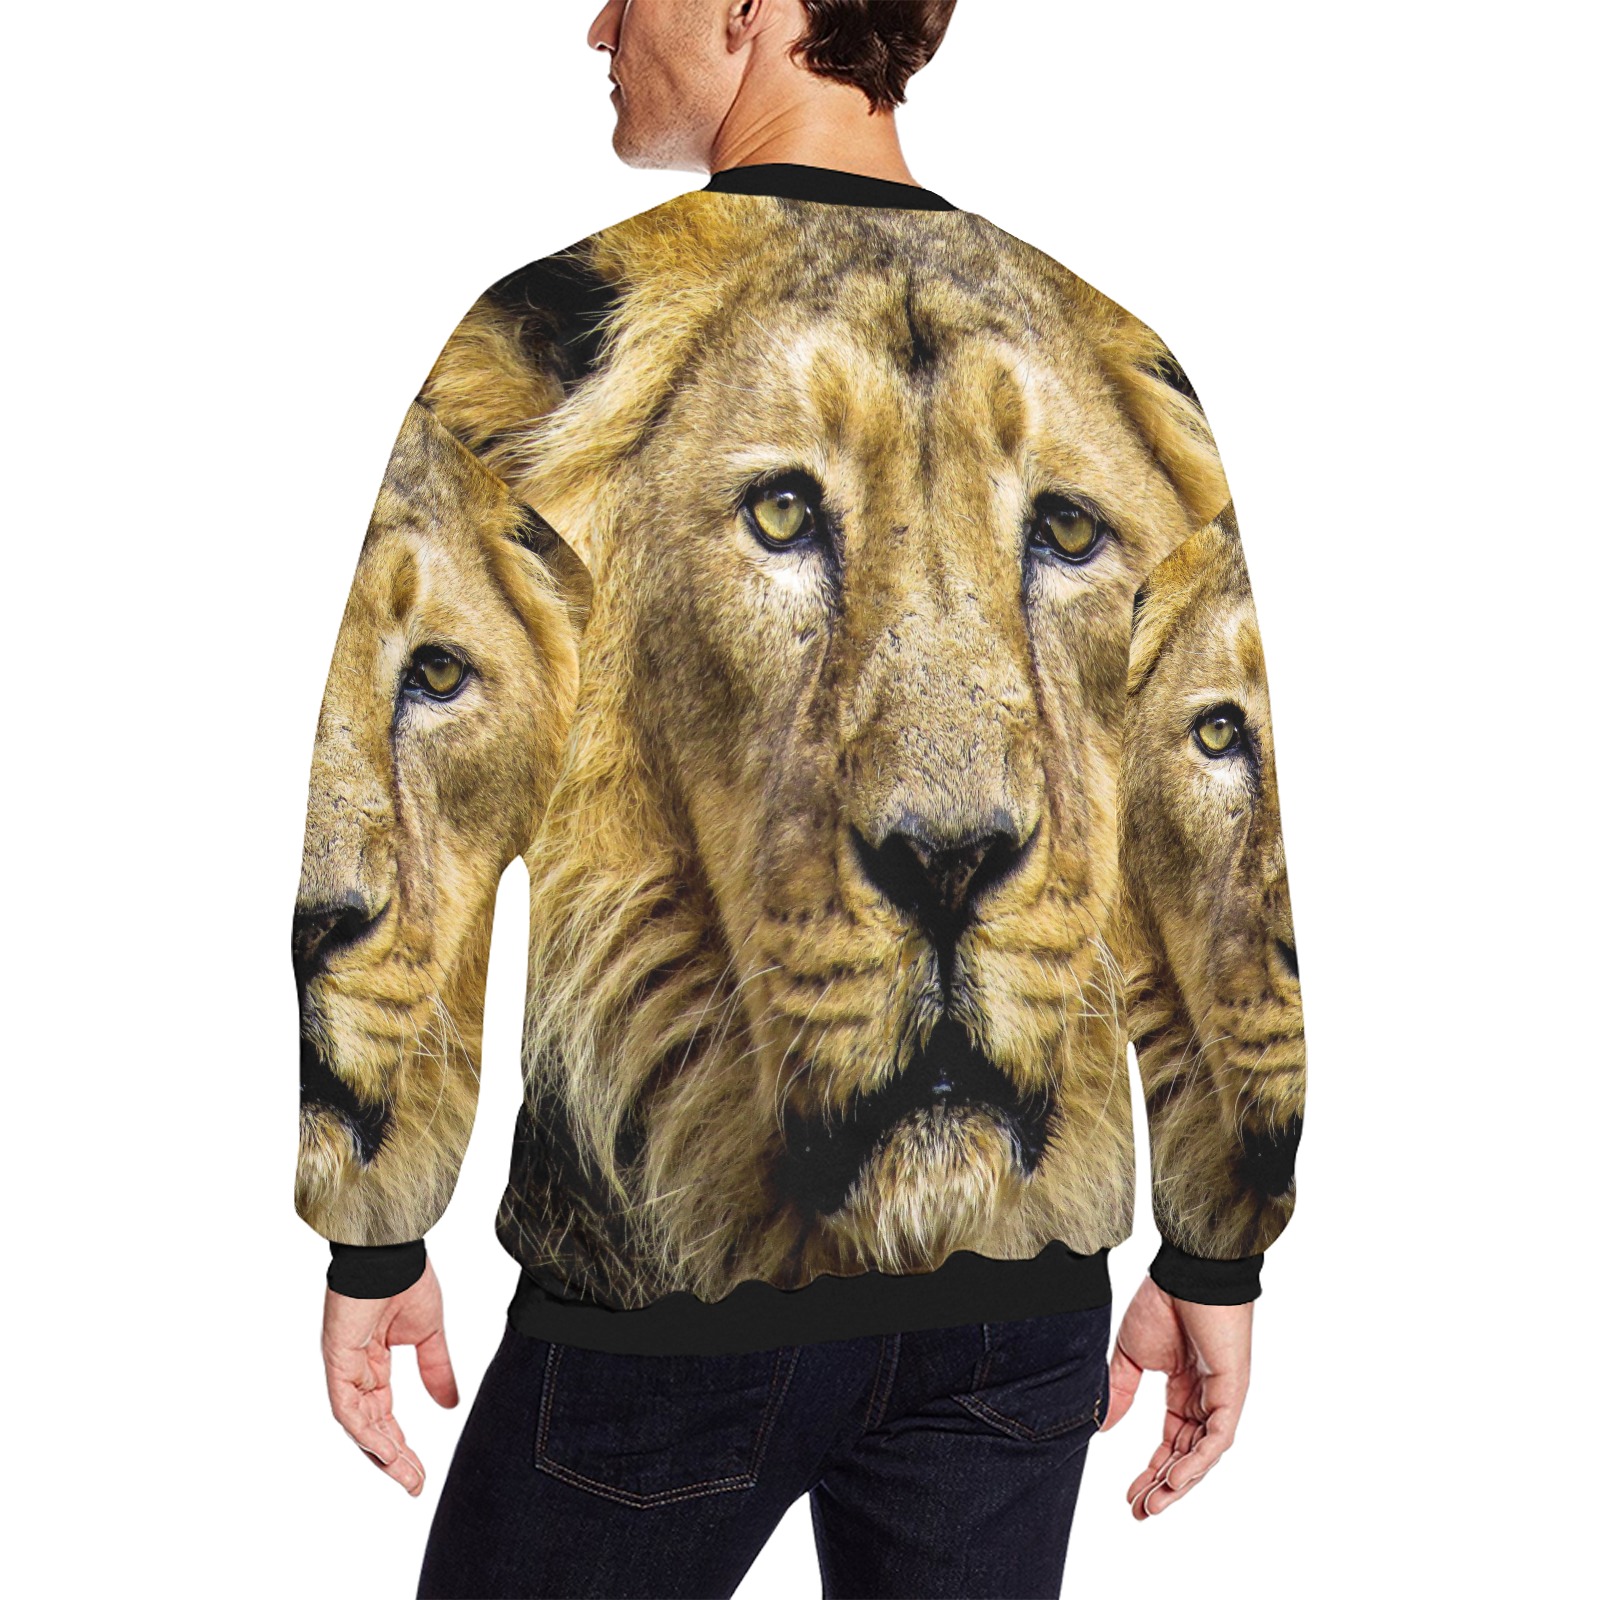 Face of Lion All Over Print Crewneck Sweatshirt for Men (Model H18)